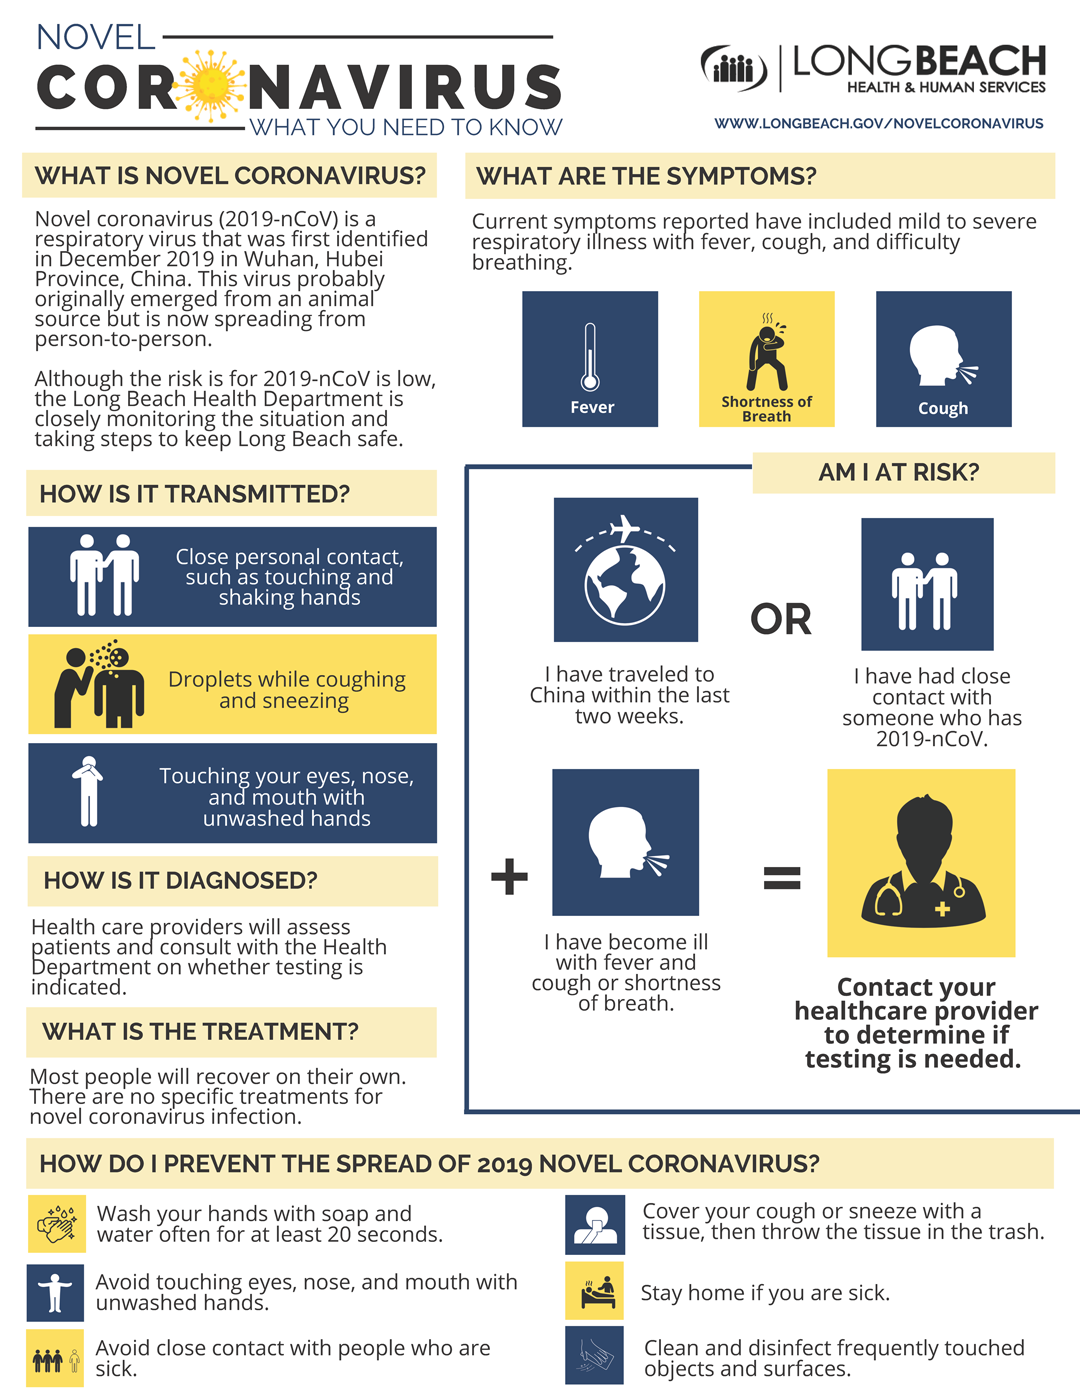 Novel Coronavirus COVID-19 | [Source: Long Beach, California's Department of Health & Human Services]